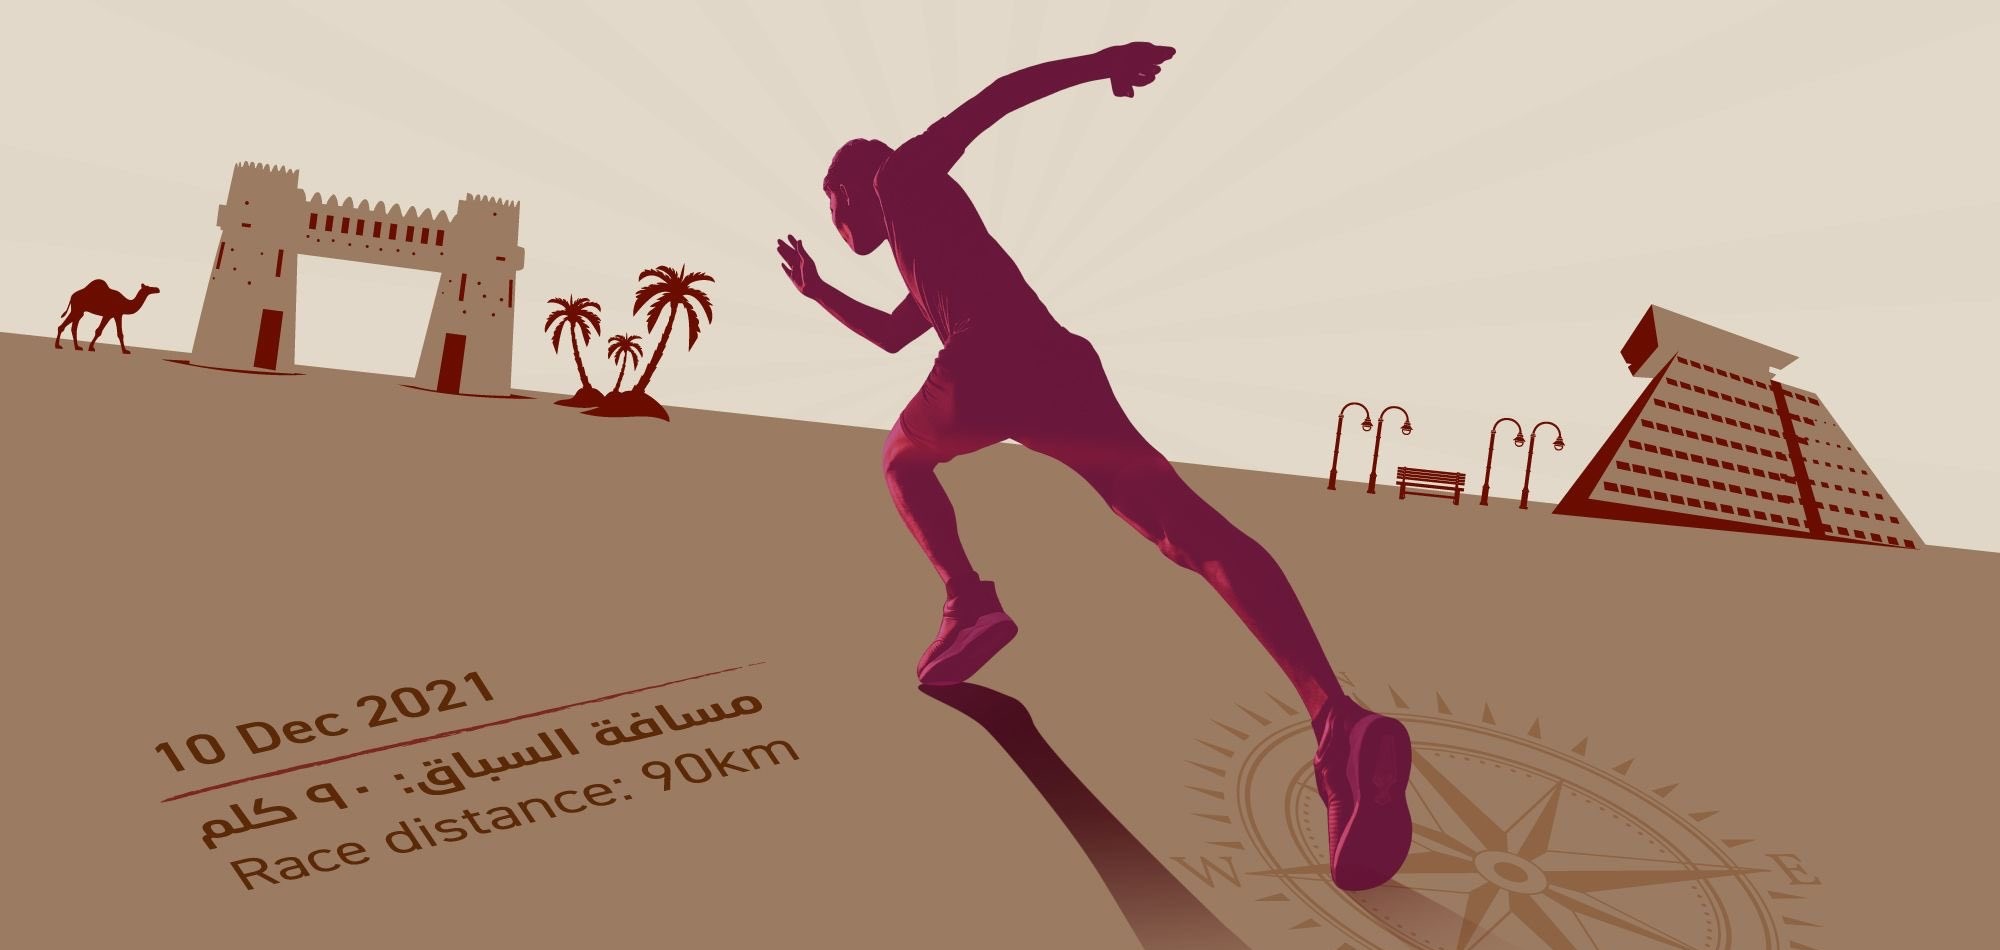 Registration no open for Qatar East-to-West Ultra Marathon